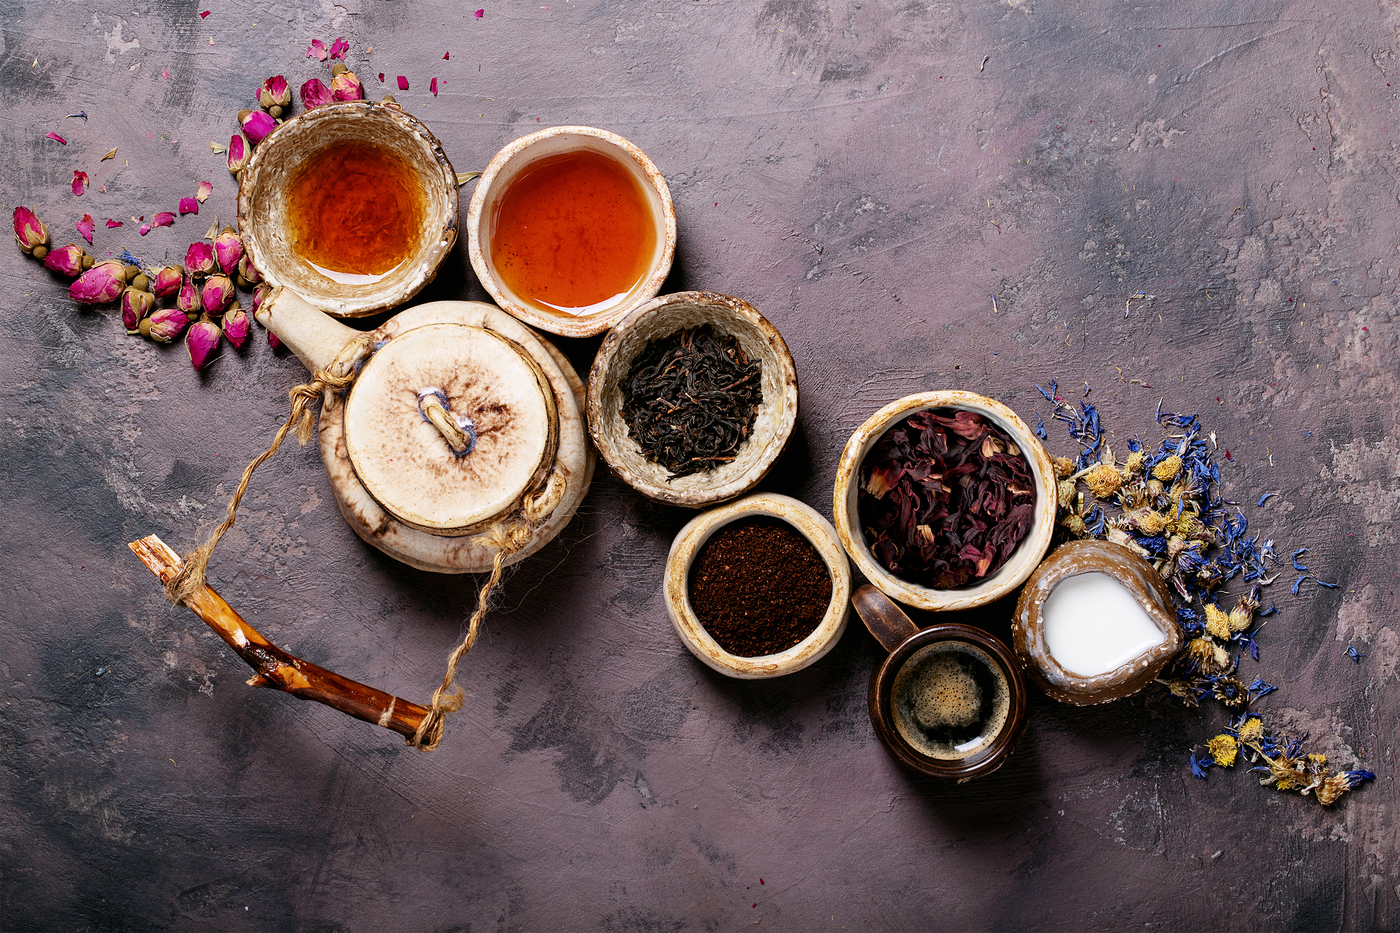 Ingredients for blending flavored teas